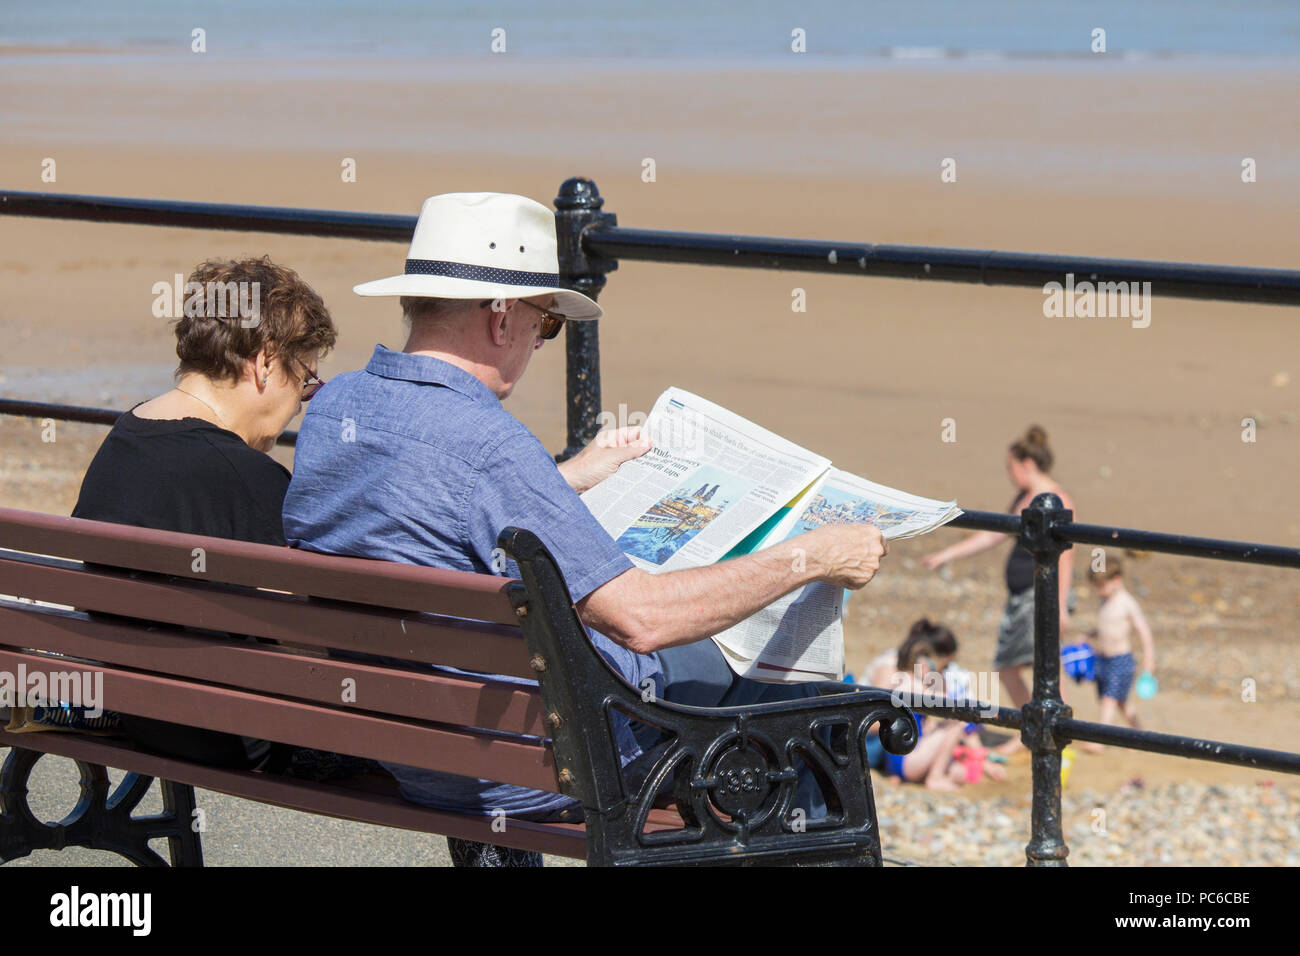 Elderly couple sitting on seat overlooking the beach. Man reading newspaper. Summer 2018. UK Stock Photo